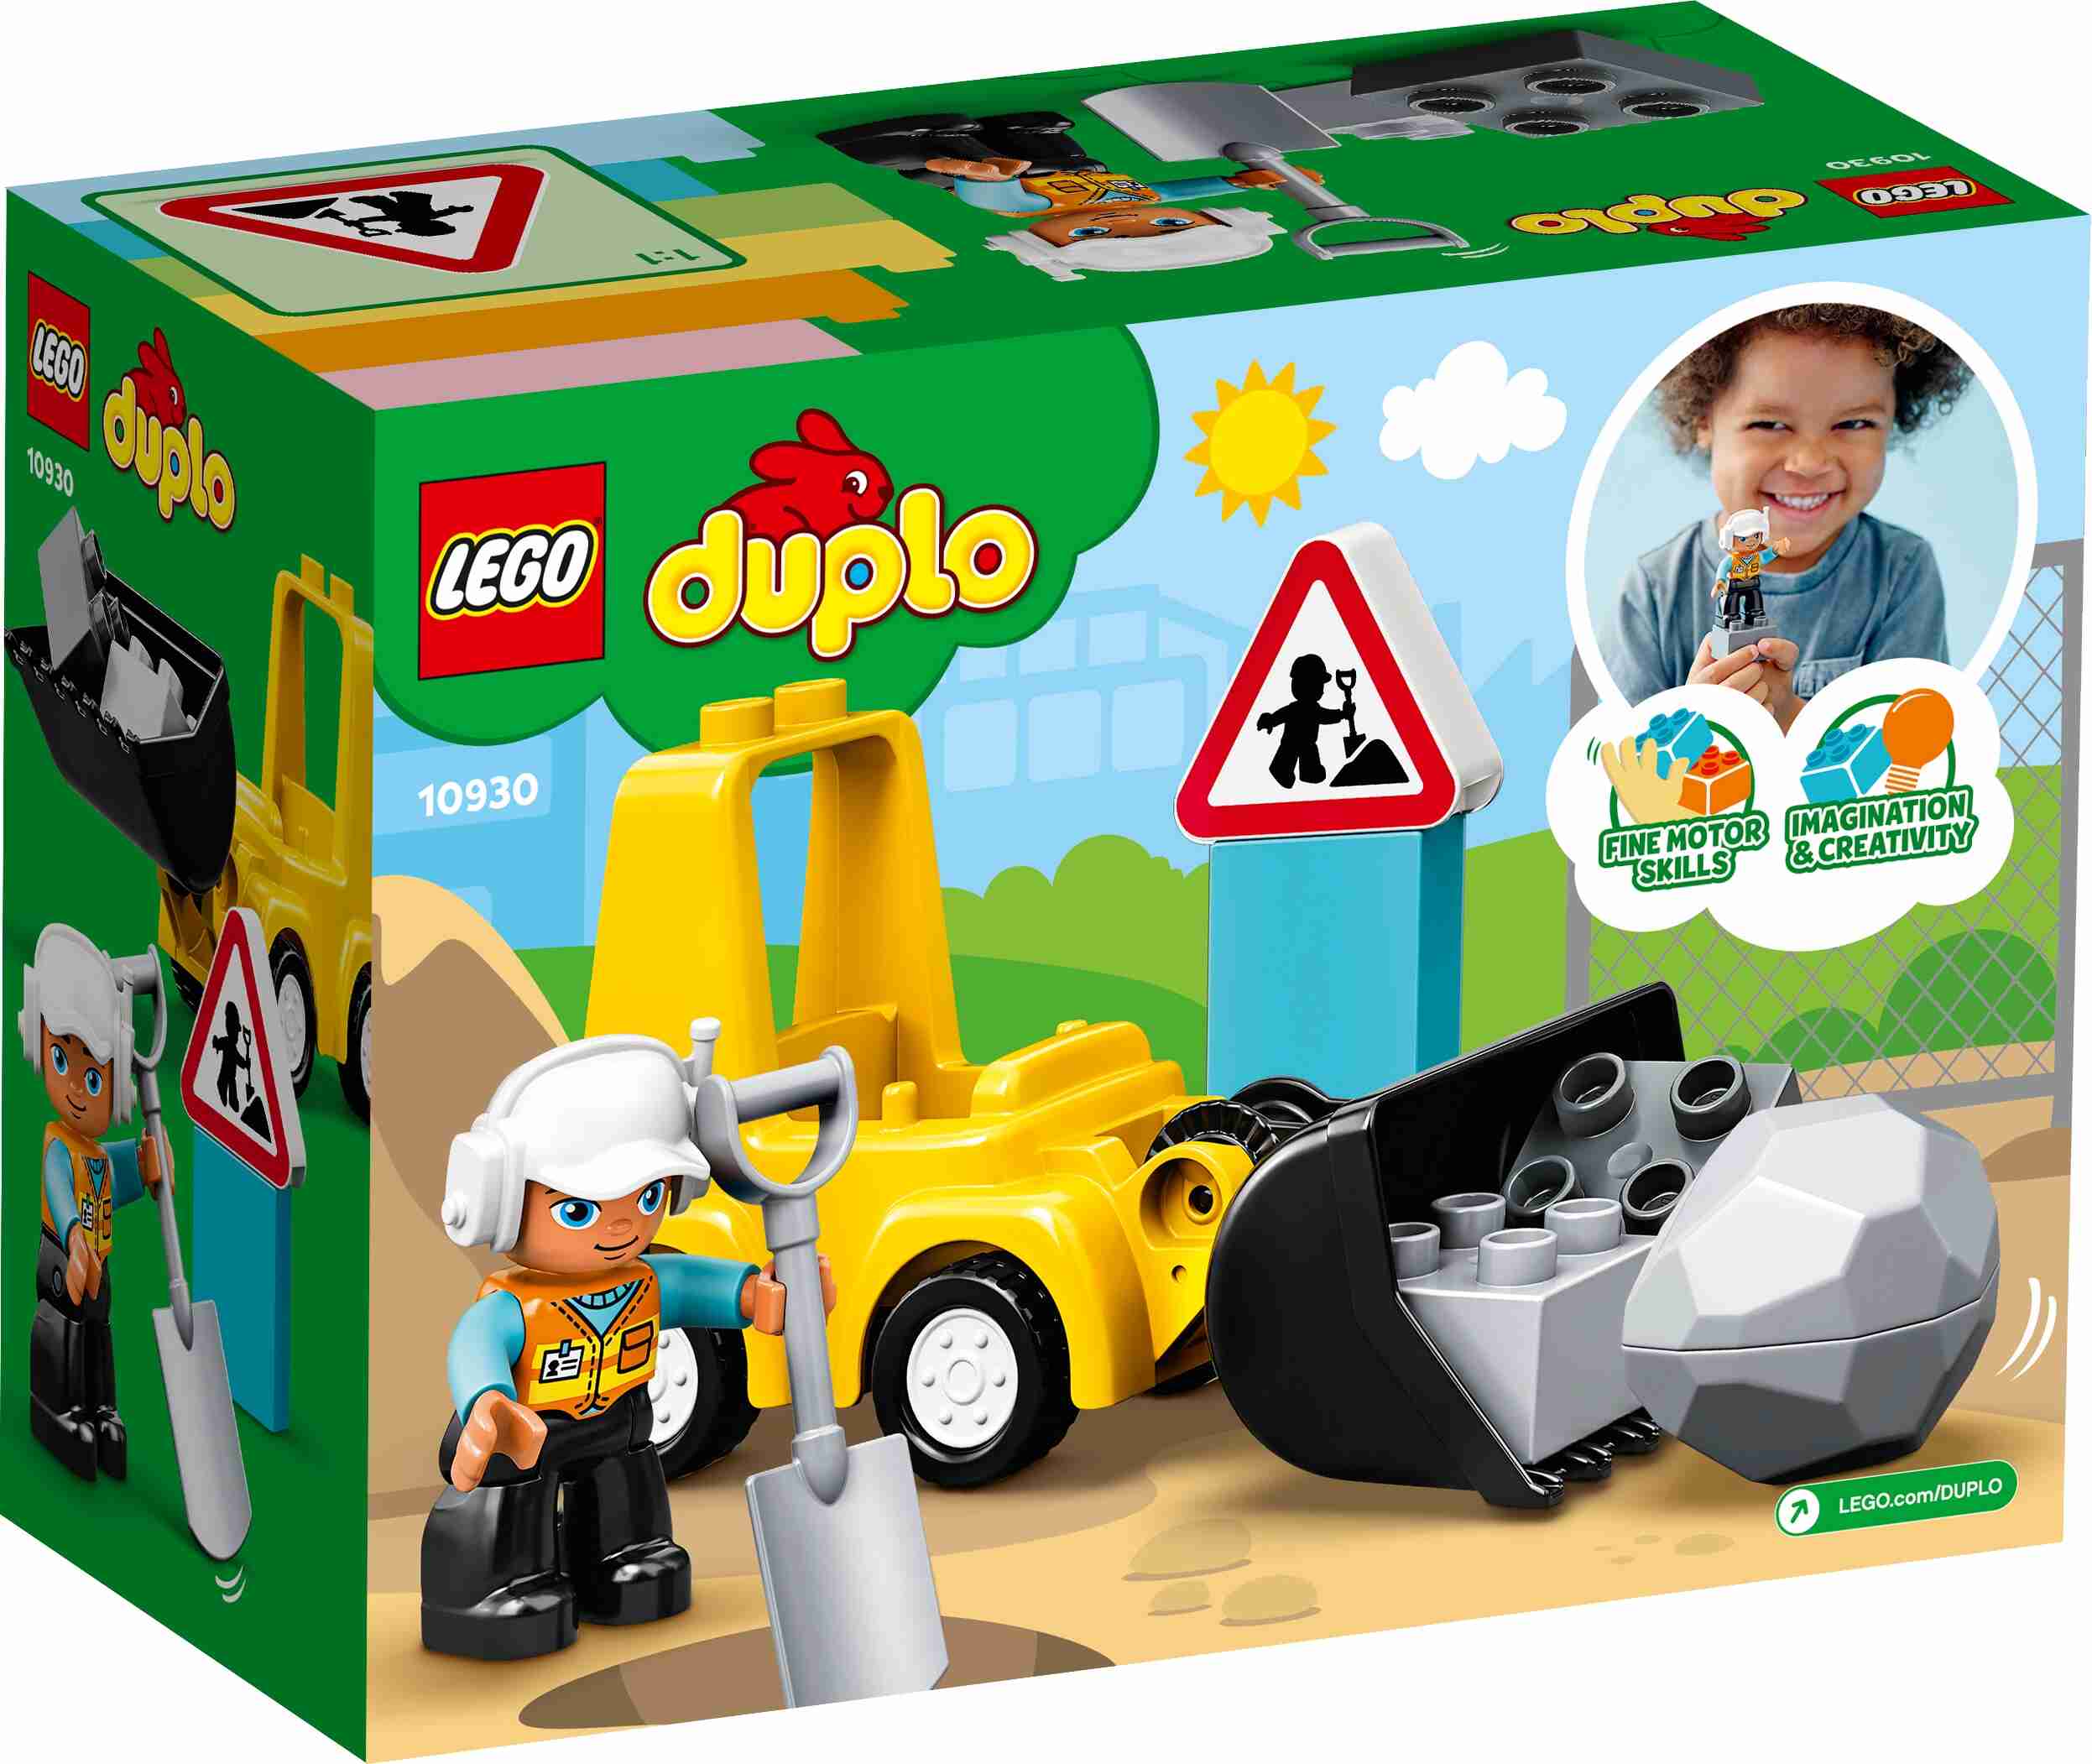 LEGO 10930 DUPLO Radlader, Spielzeug-Set mit Baufahrzeug